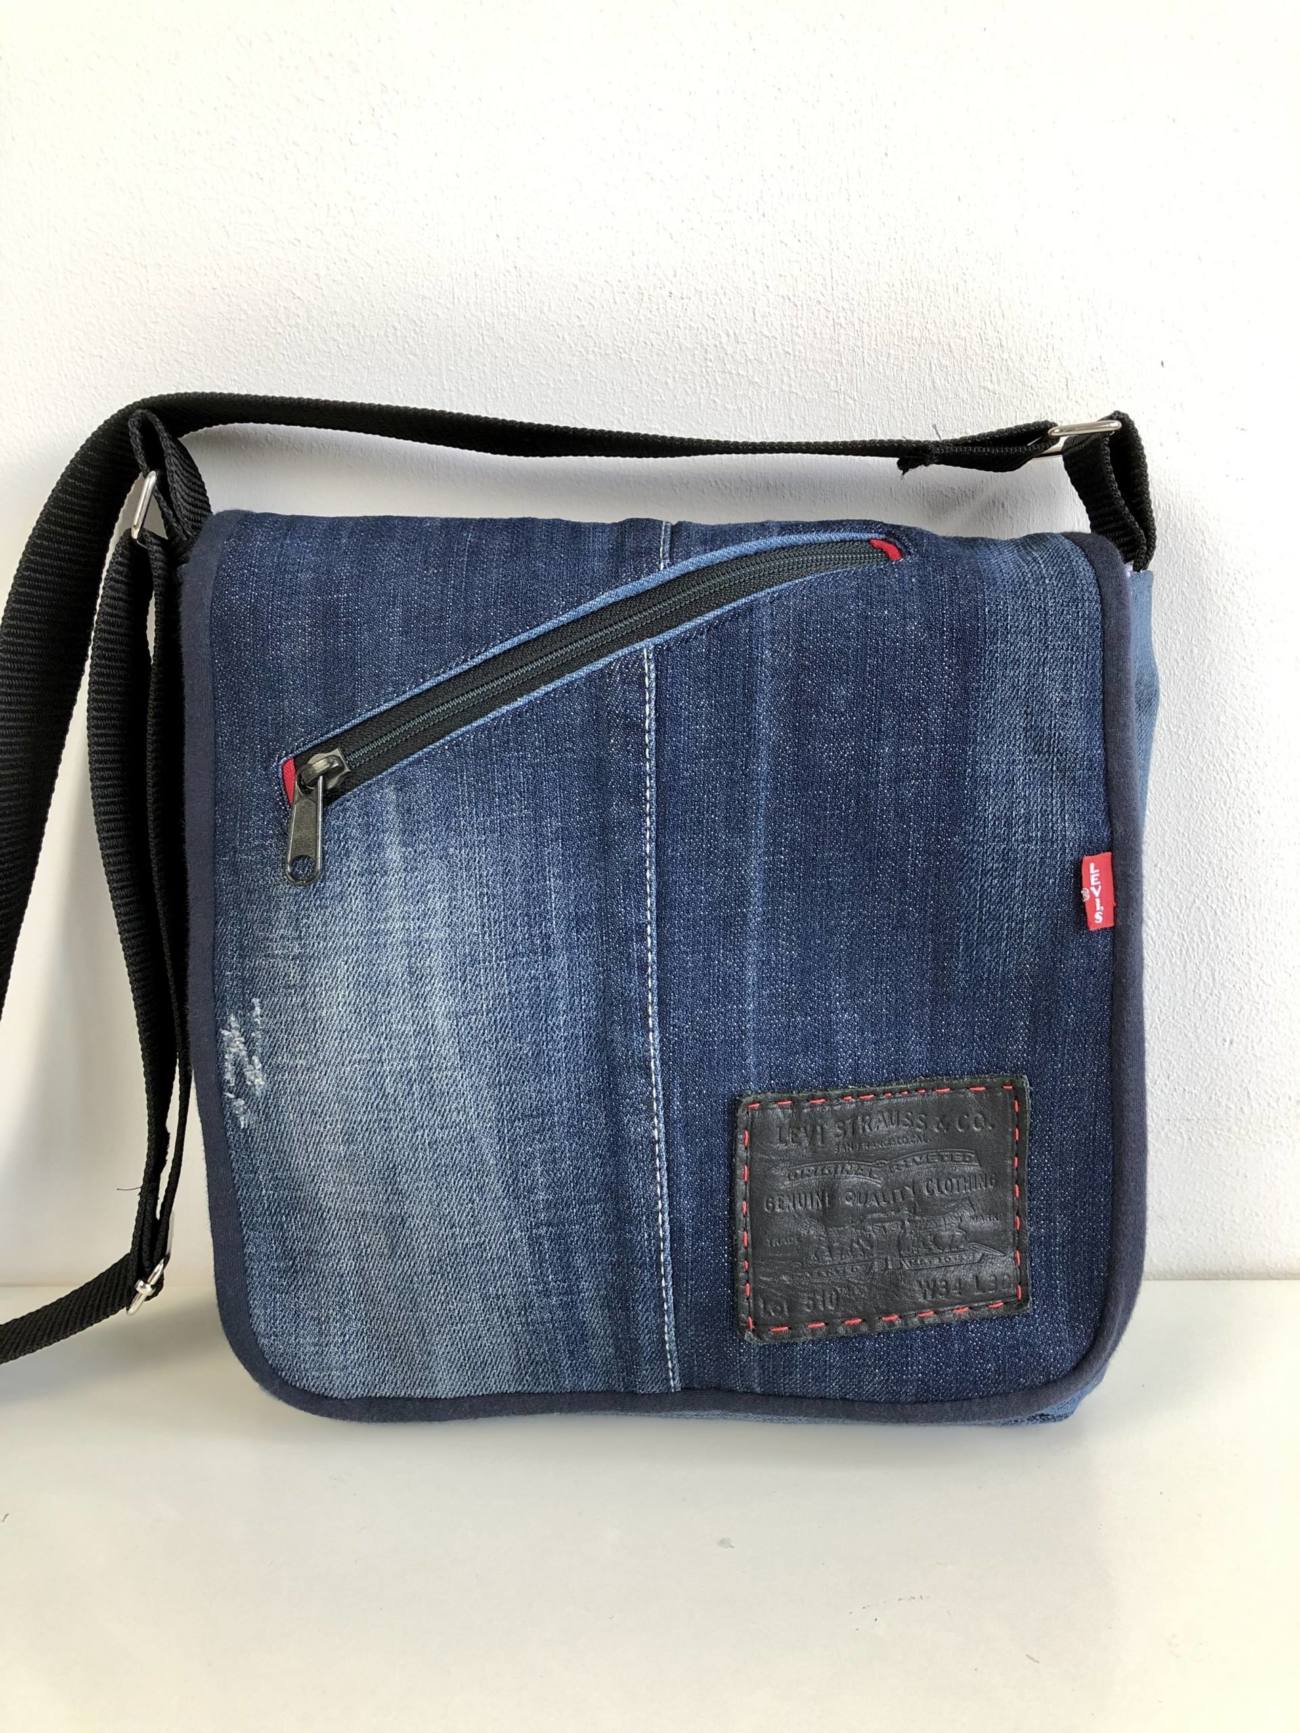 Ravelry: Denim Envelope Bag pattern by Hannah Cross